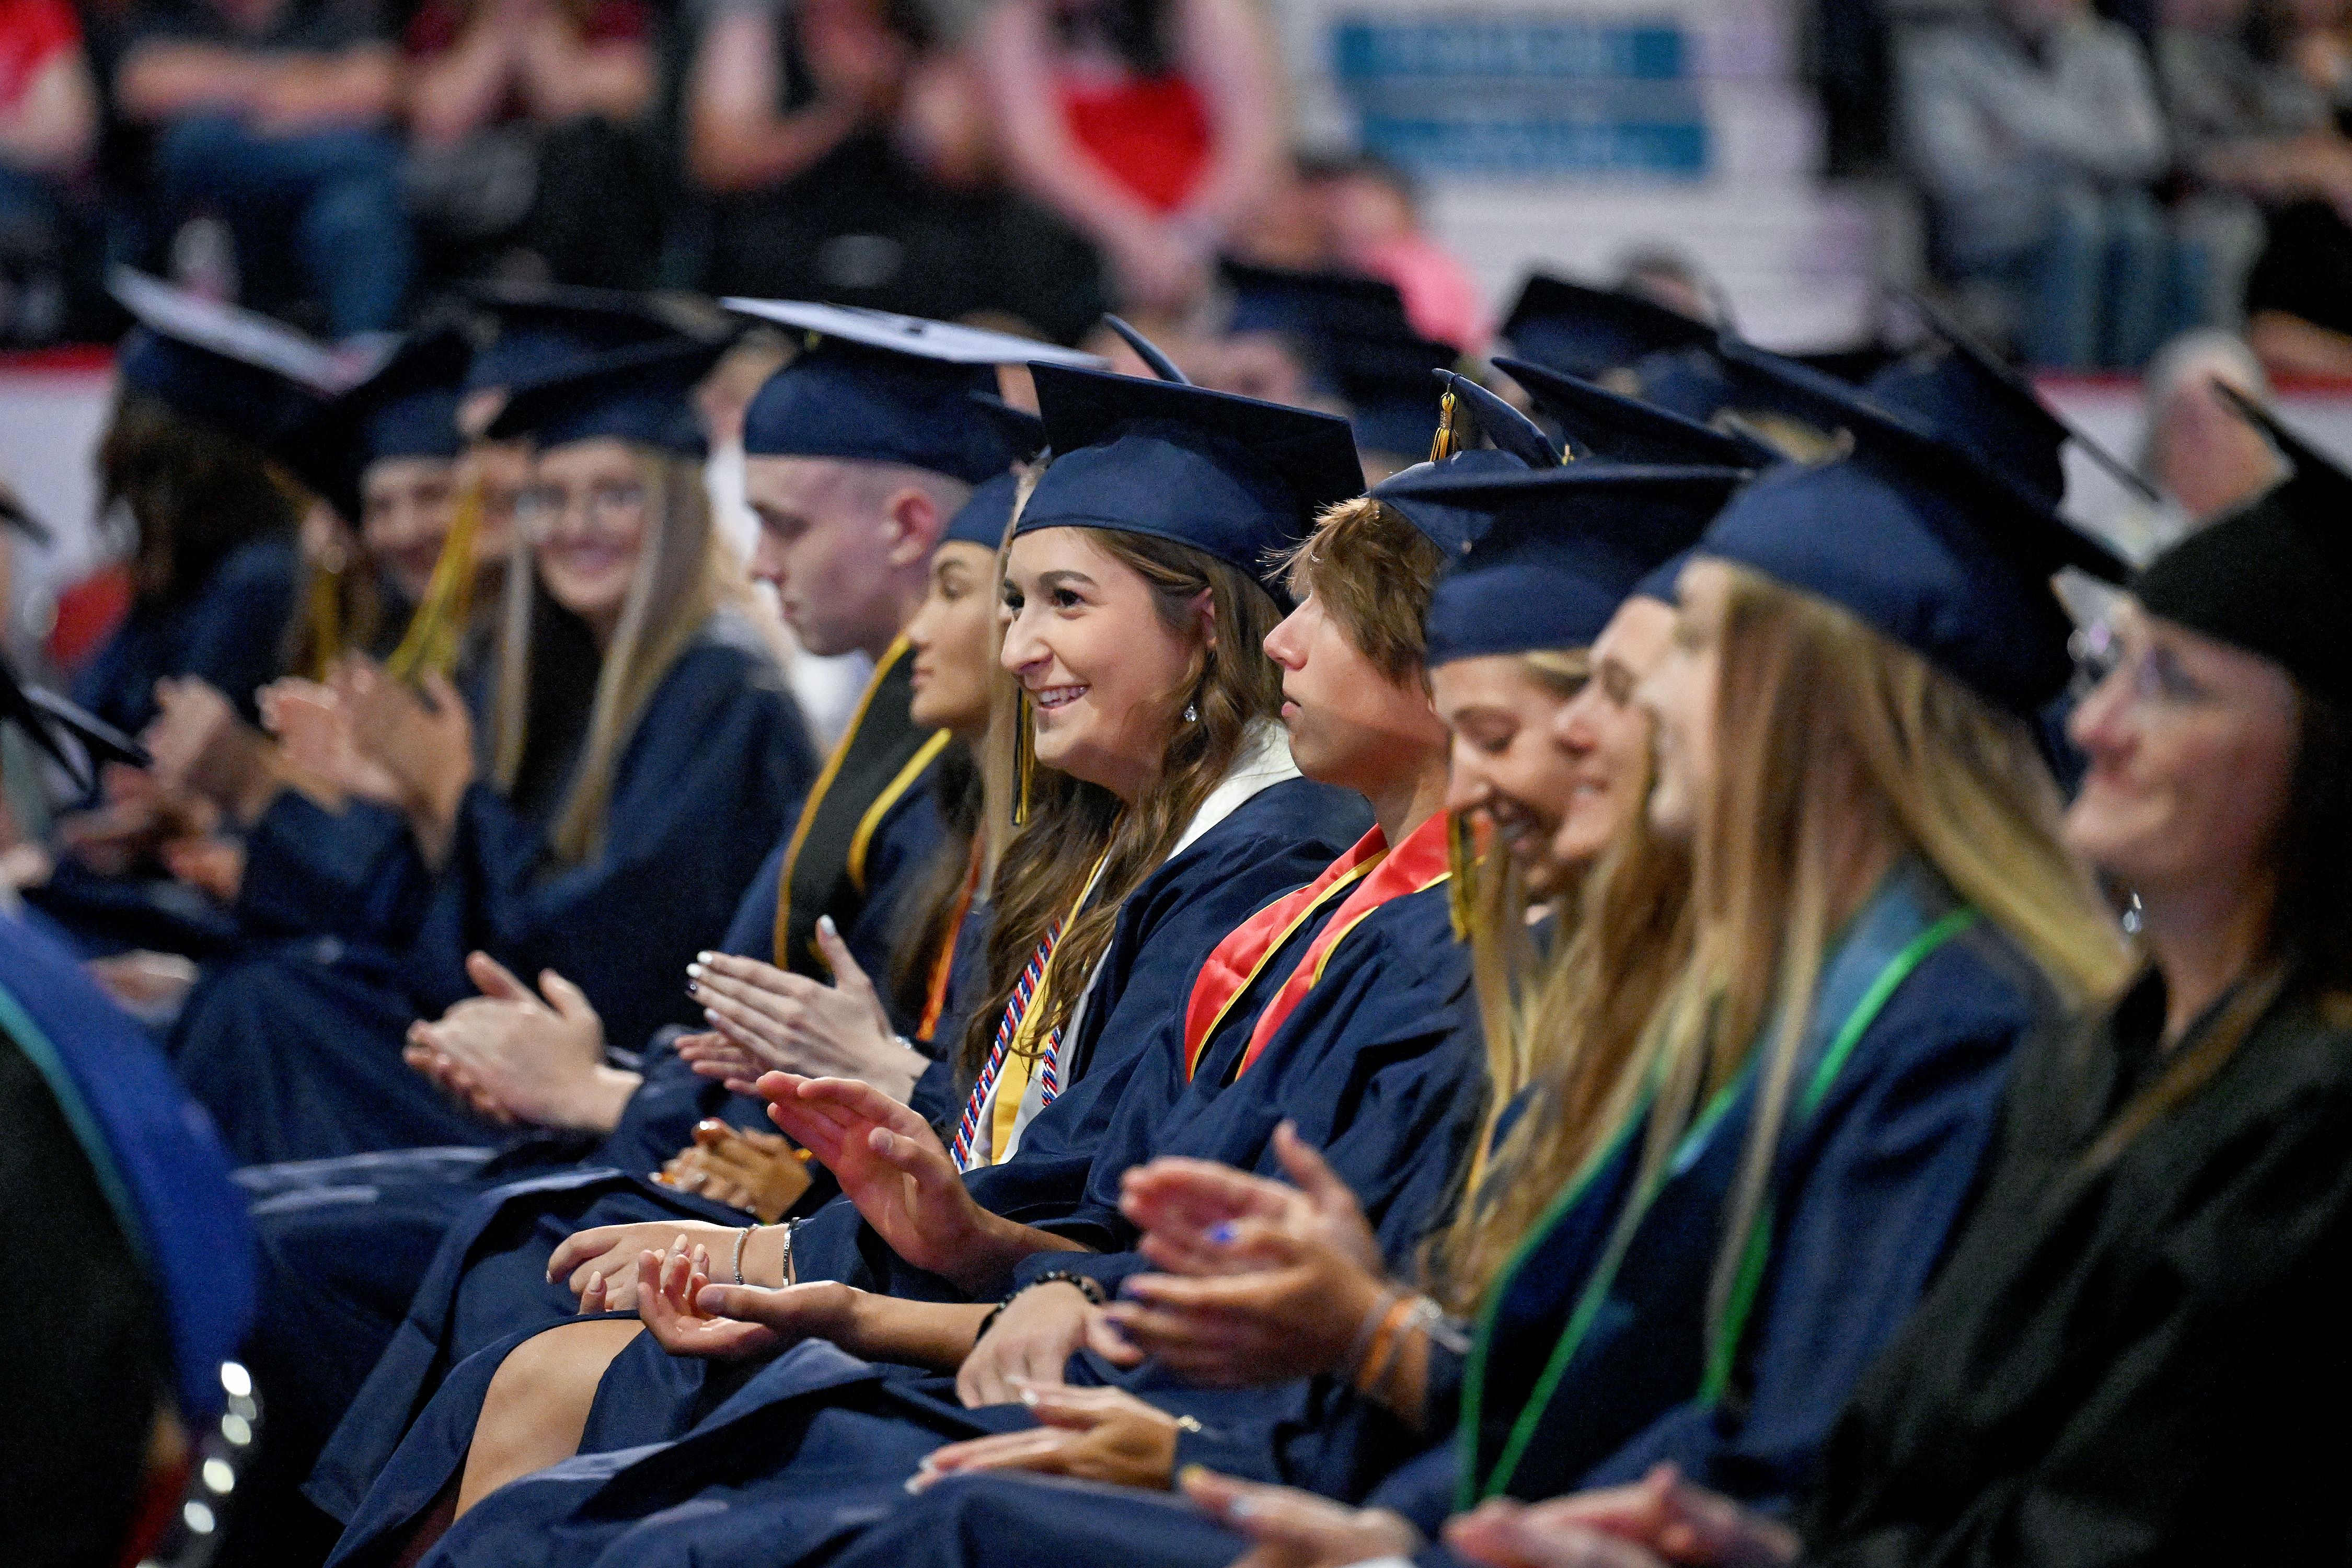 Graduates applaud during graduation ceremony.